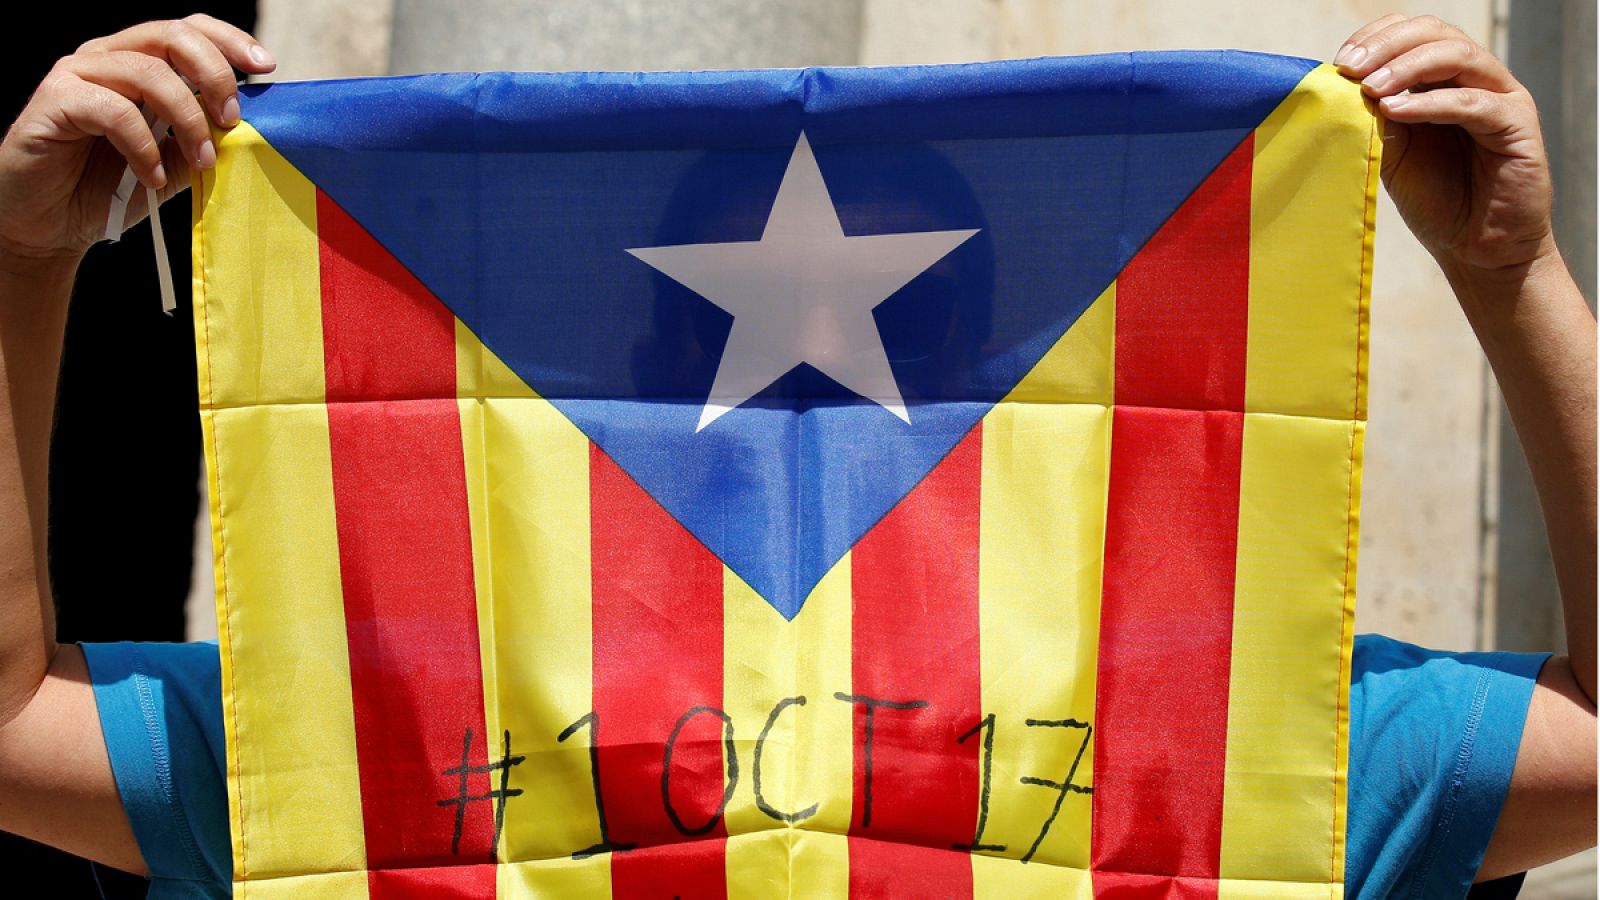 Una estelada catalana con la fecha del referéndum del 1 de octubre de 2017